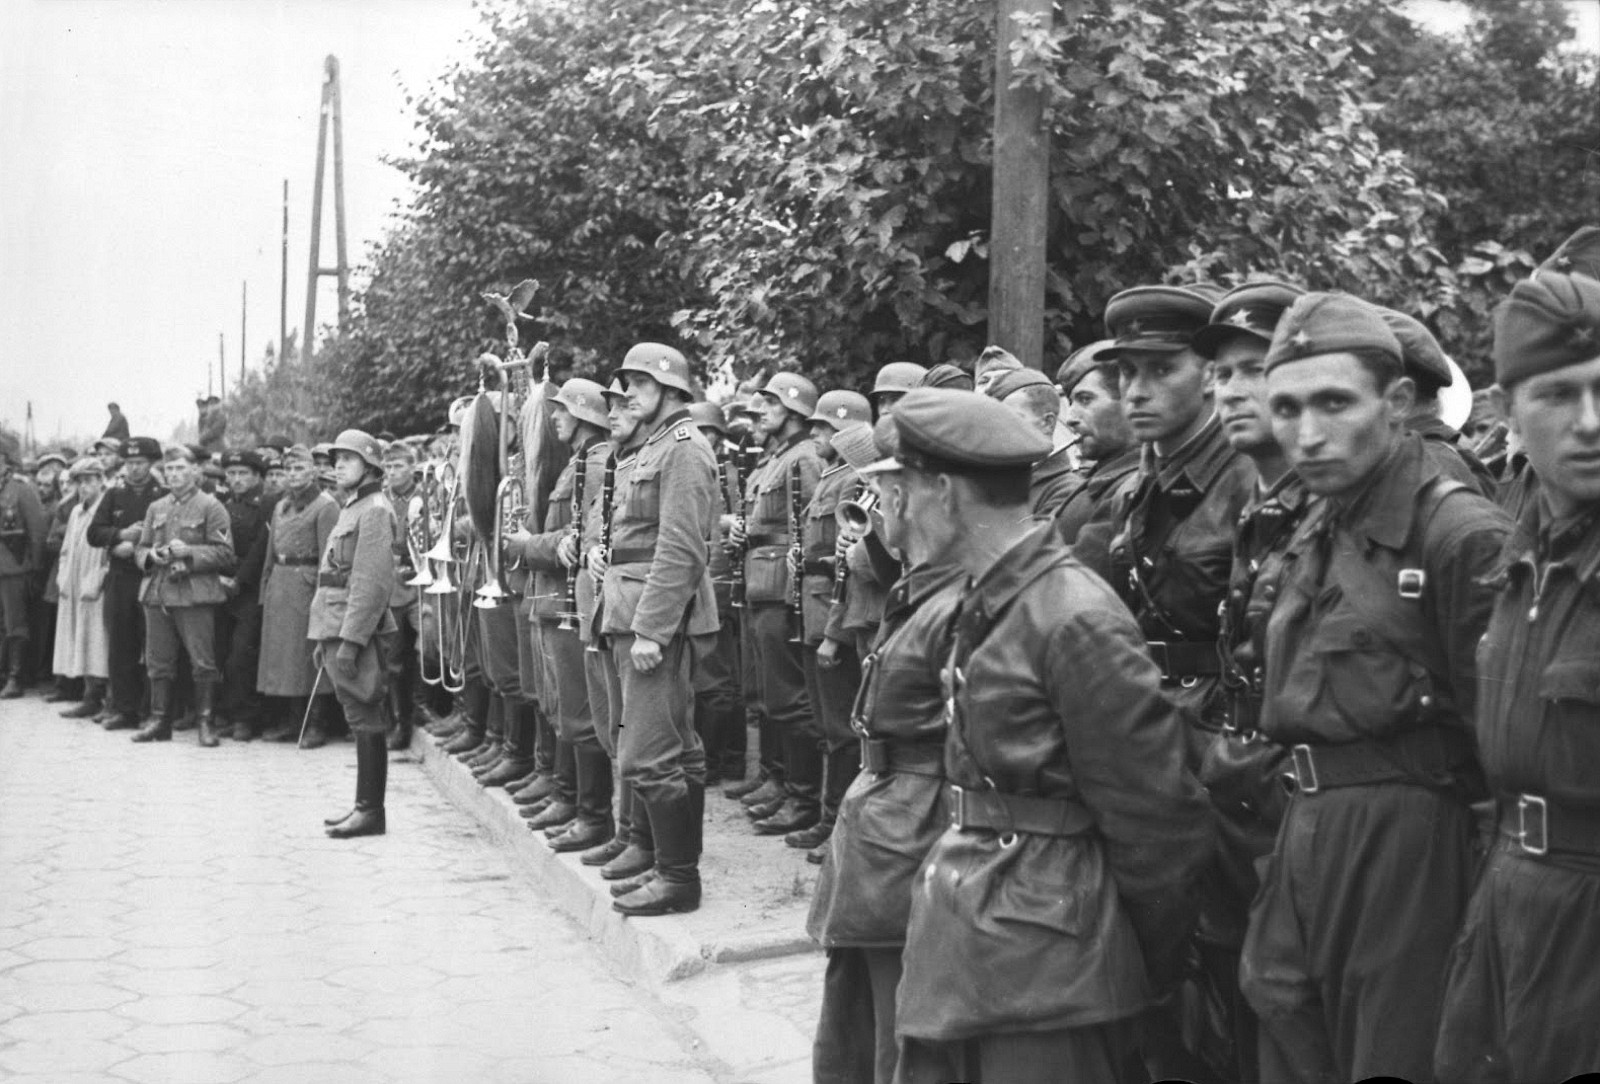 Soviet troops at the German-Soviet parade in occupied Brest, Sept. 22, 1939